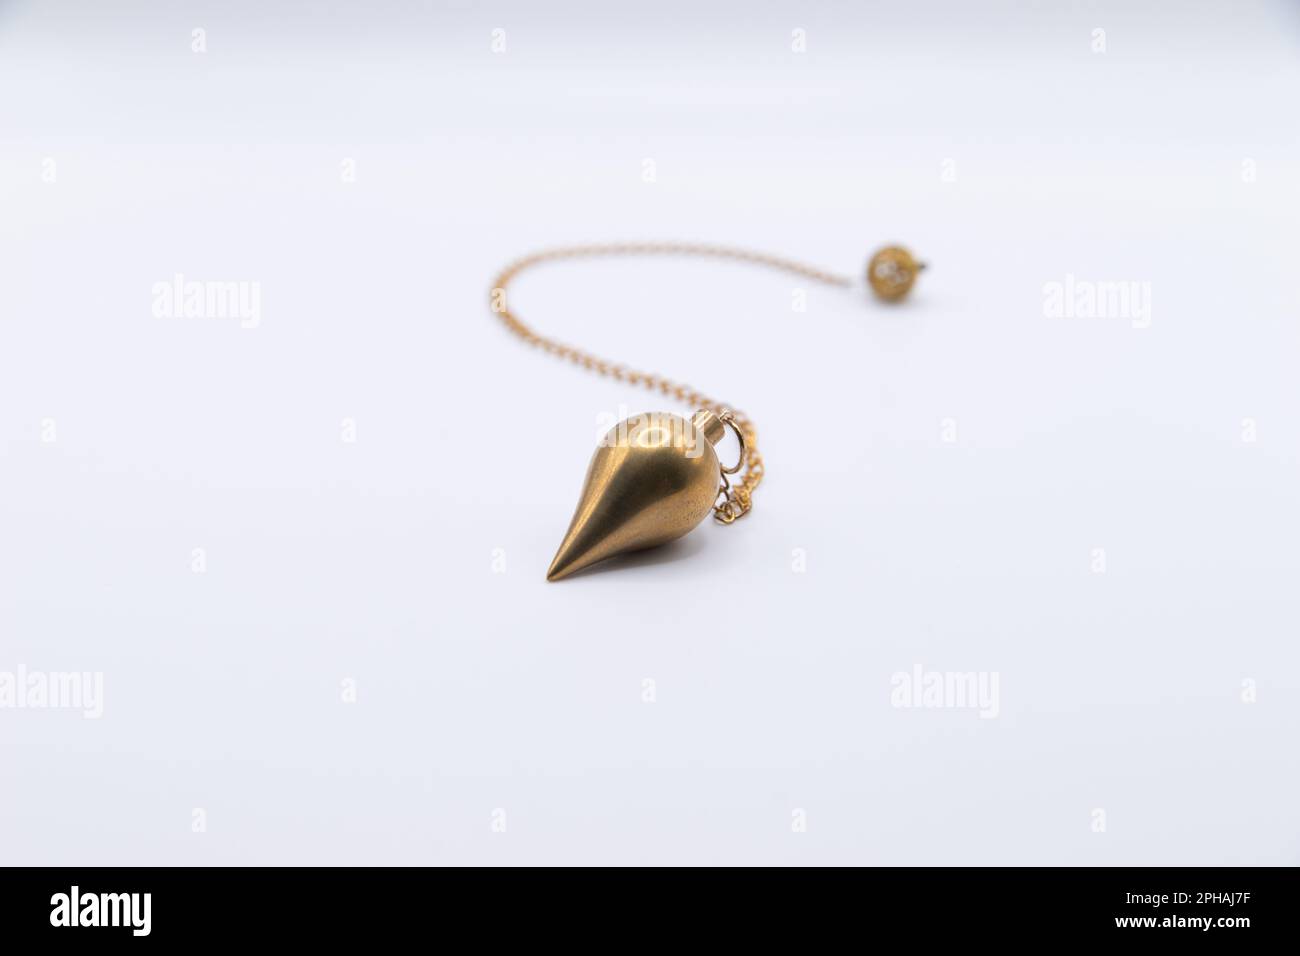 Brass pendulum on chain isolated on white background. Stock Photo